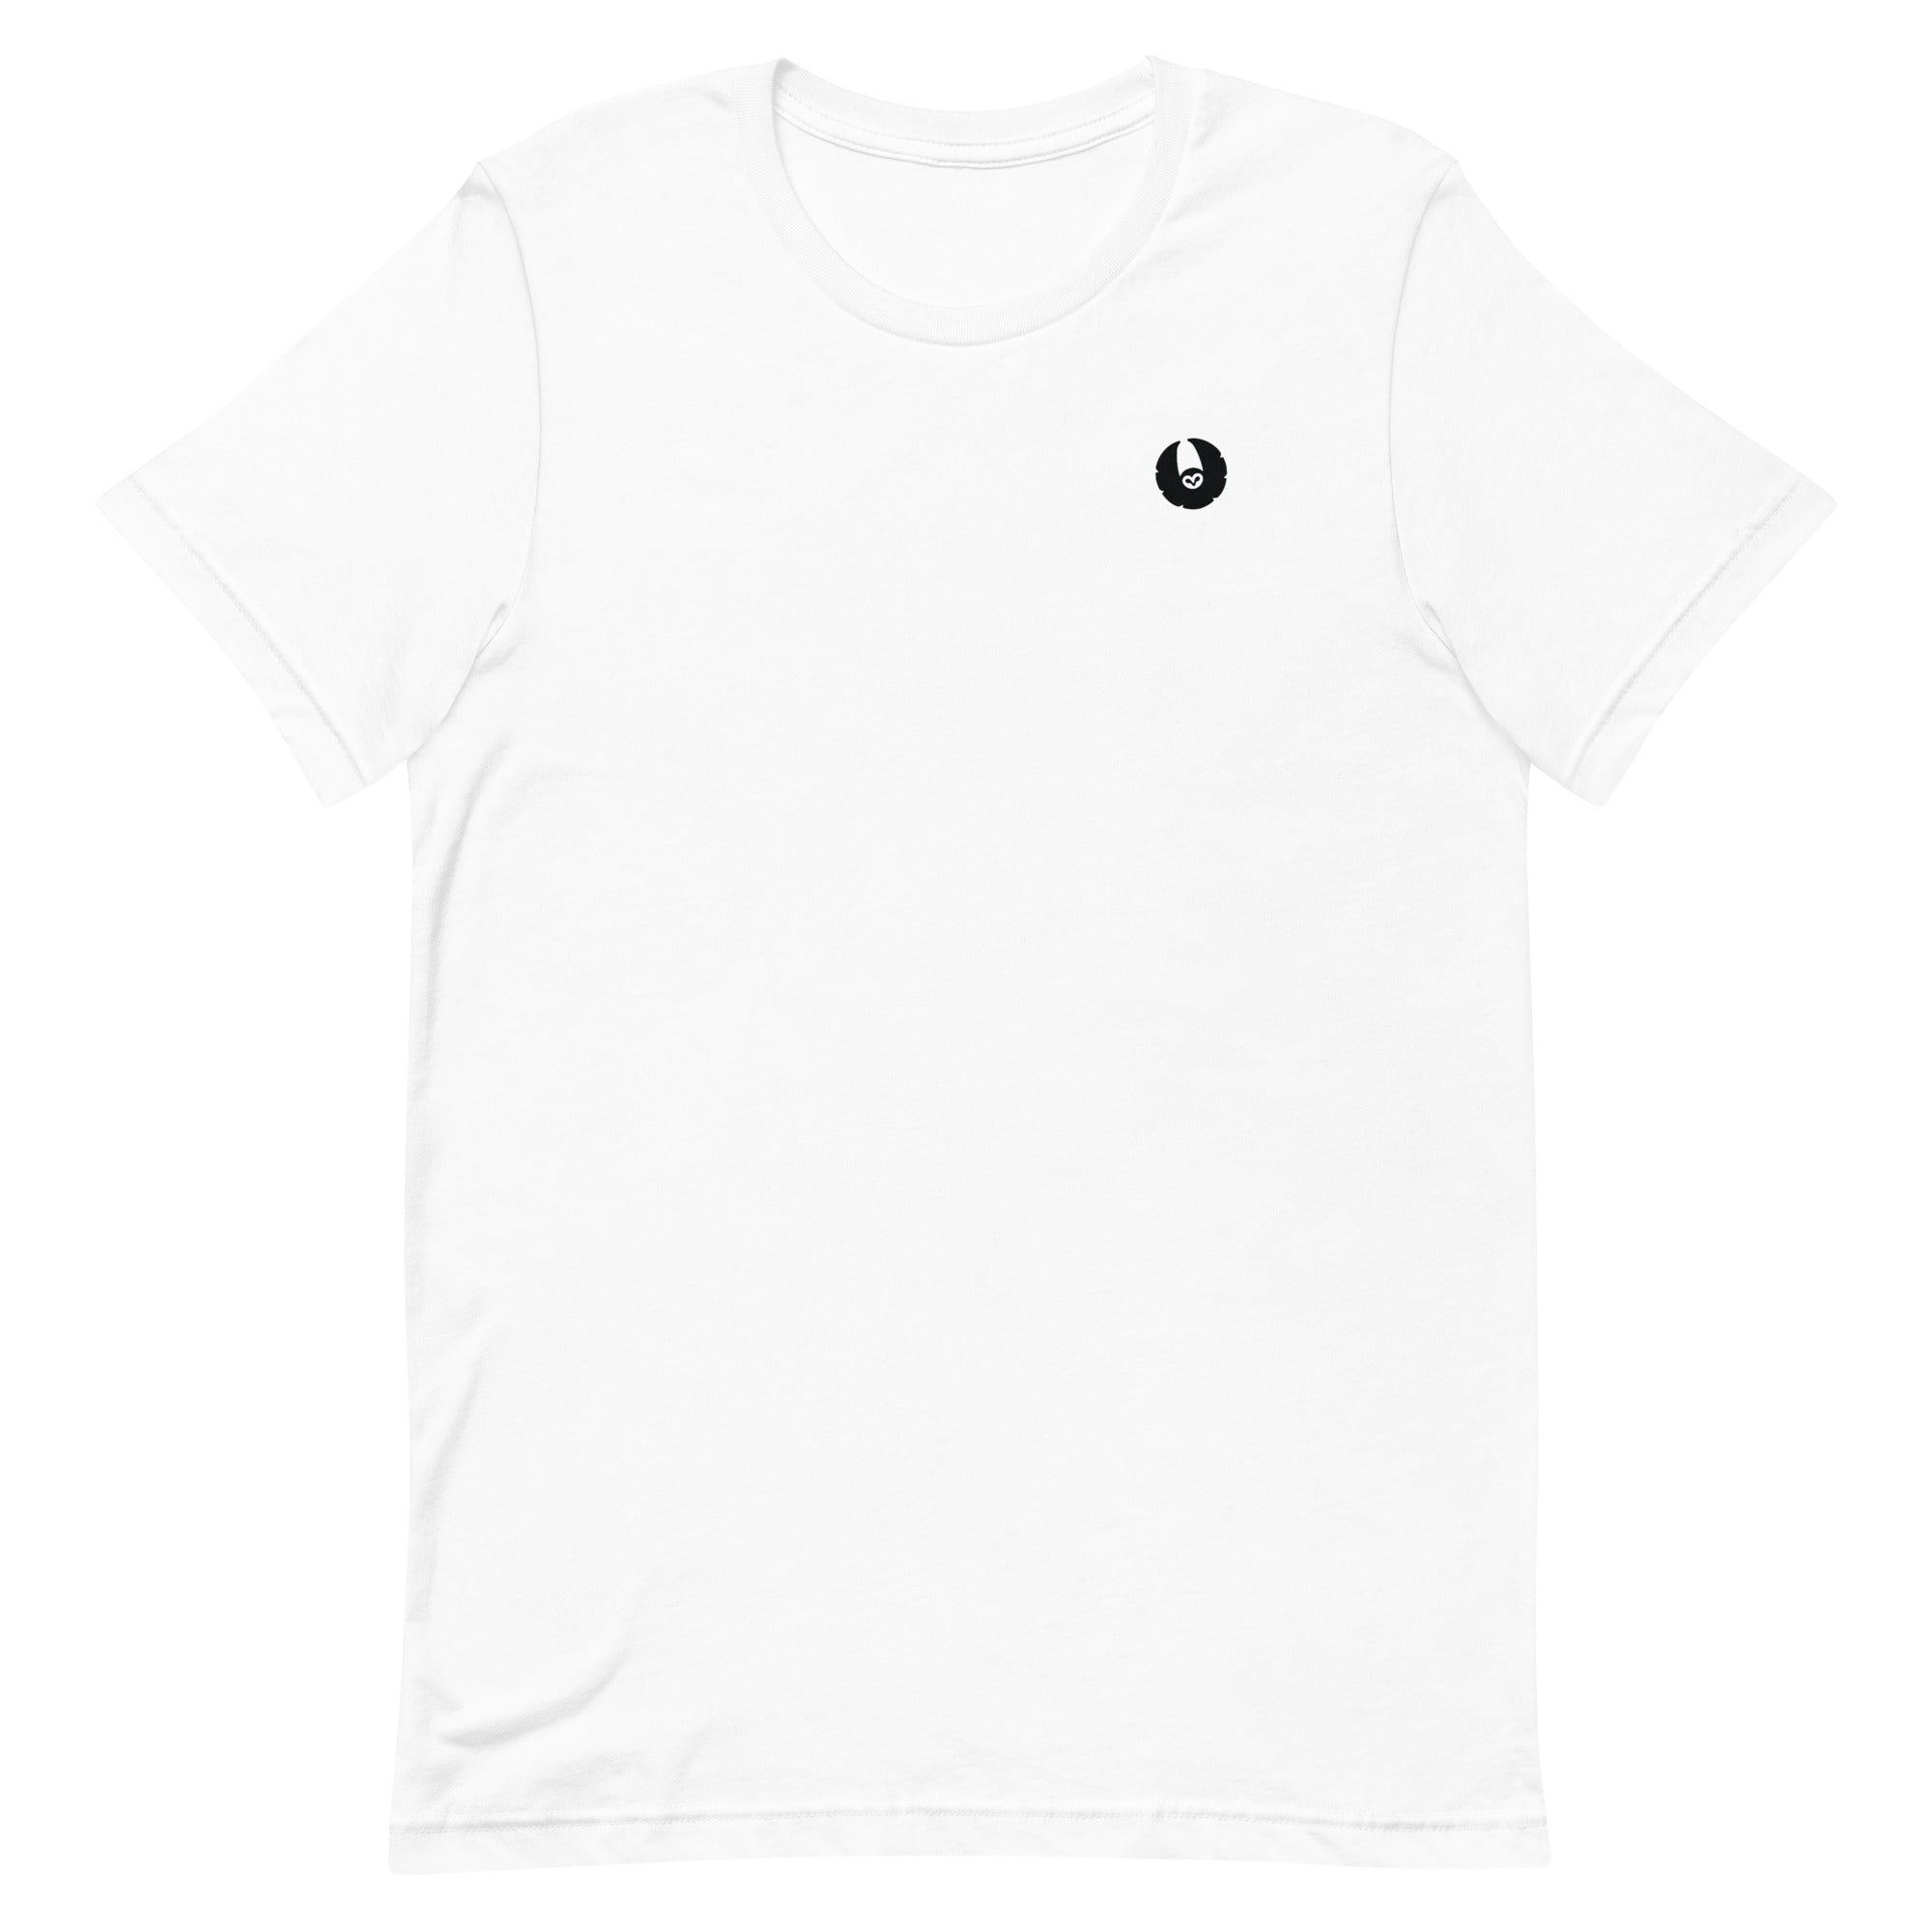 Open Owl Studios t-shirt